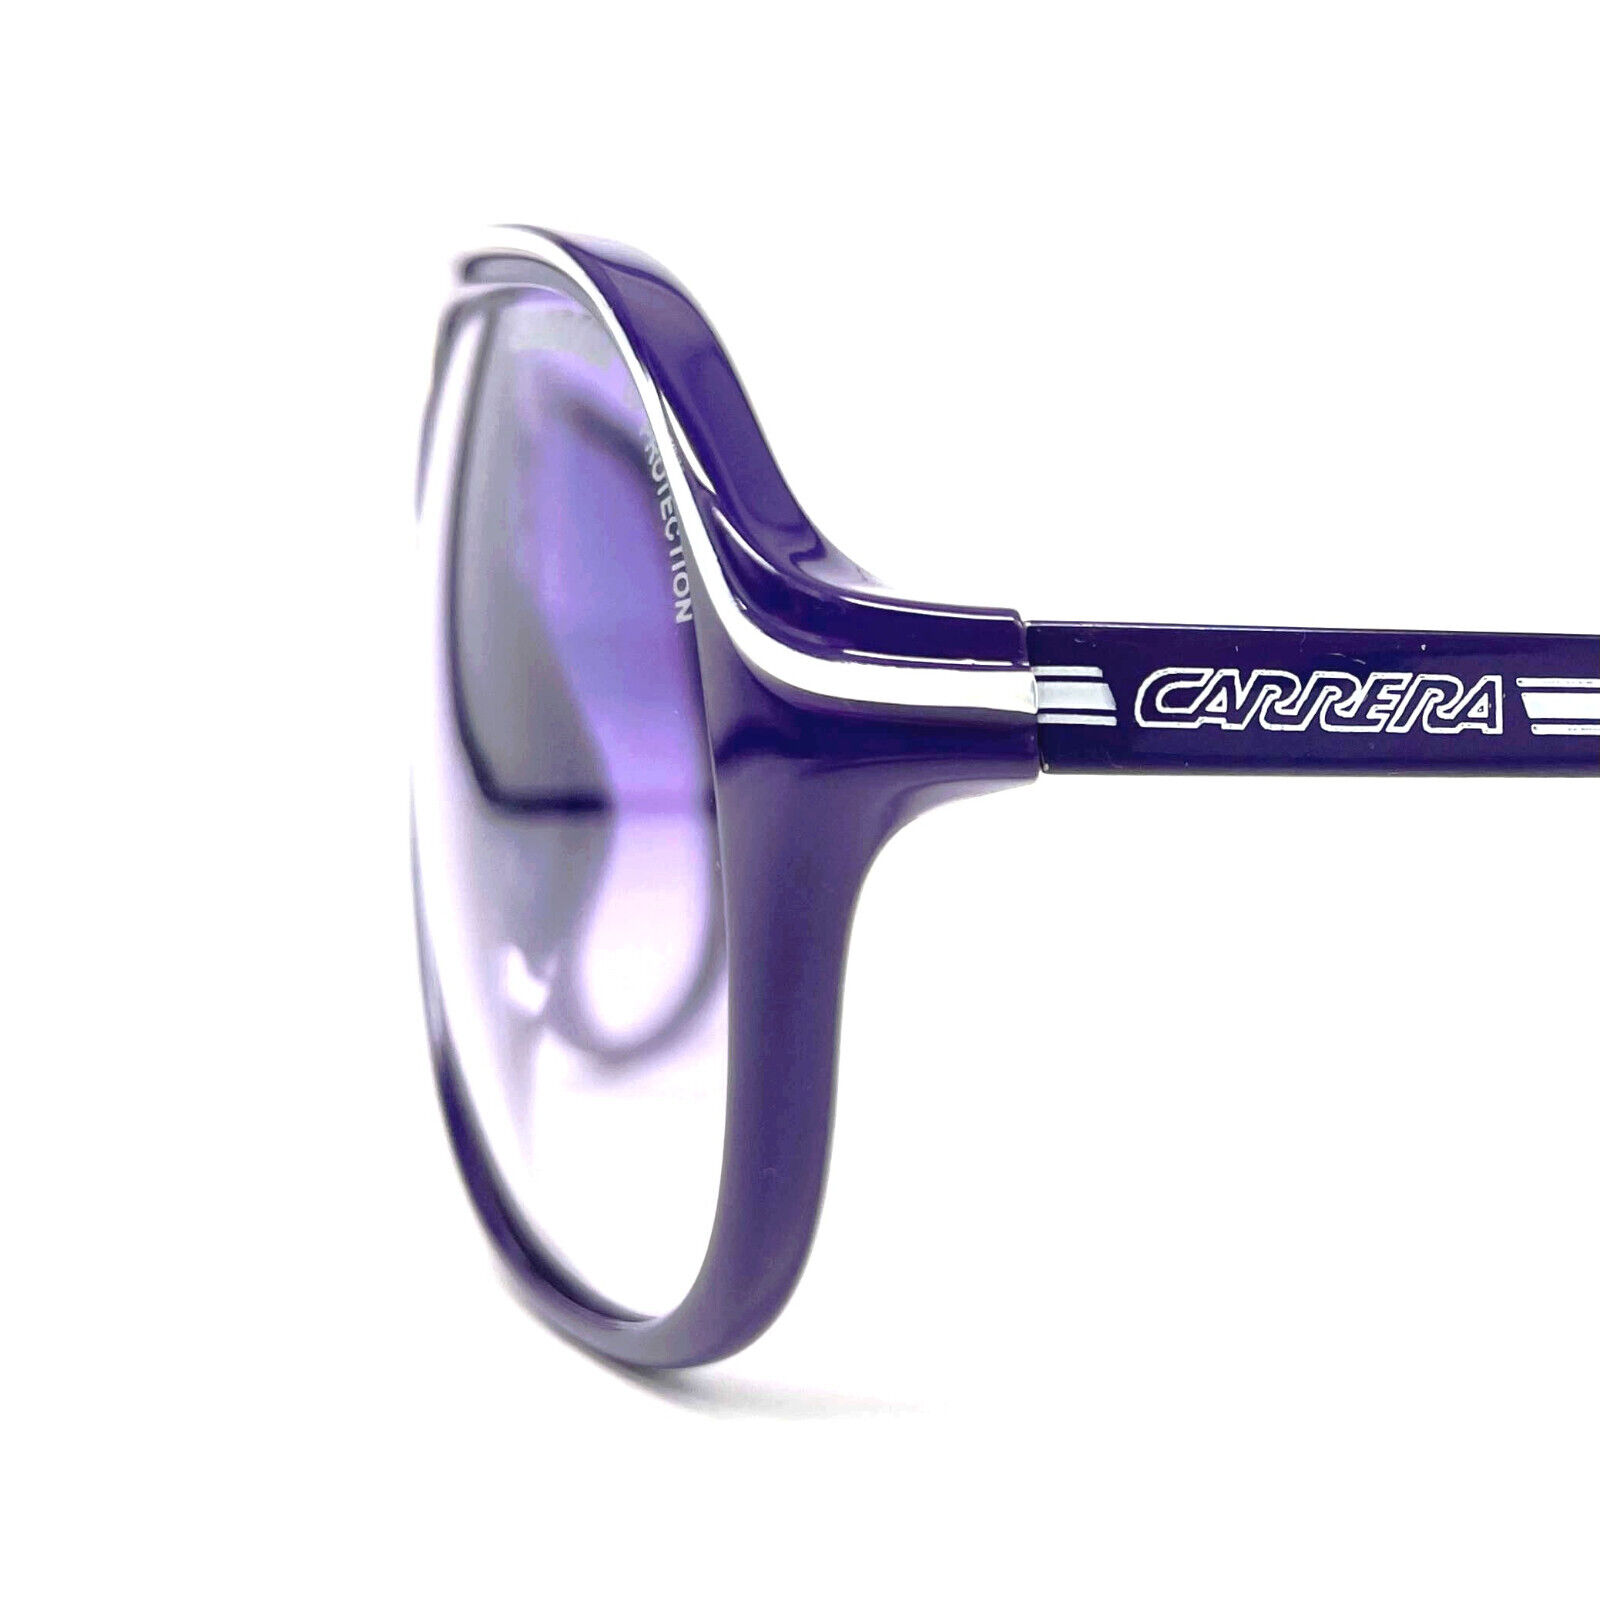 NOS vintage CARRERA "SAFARI" sunglasses - Italy 9… - image 7